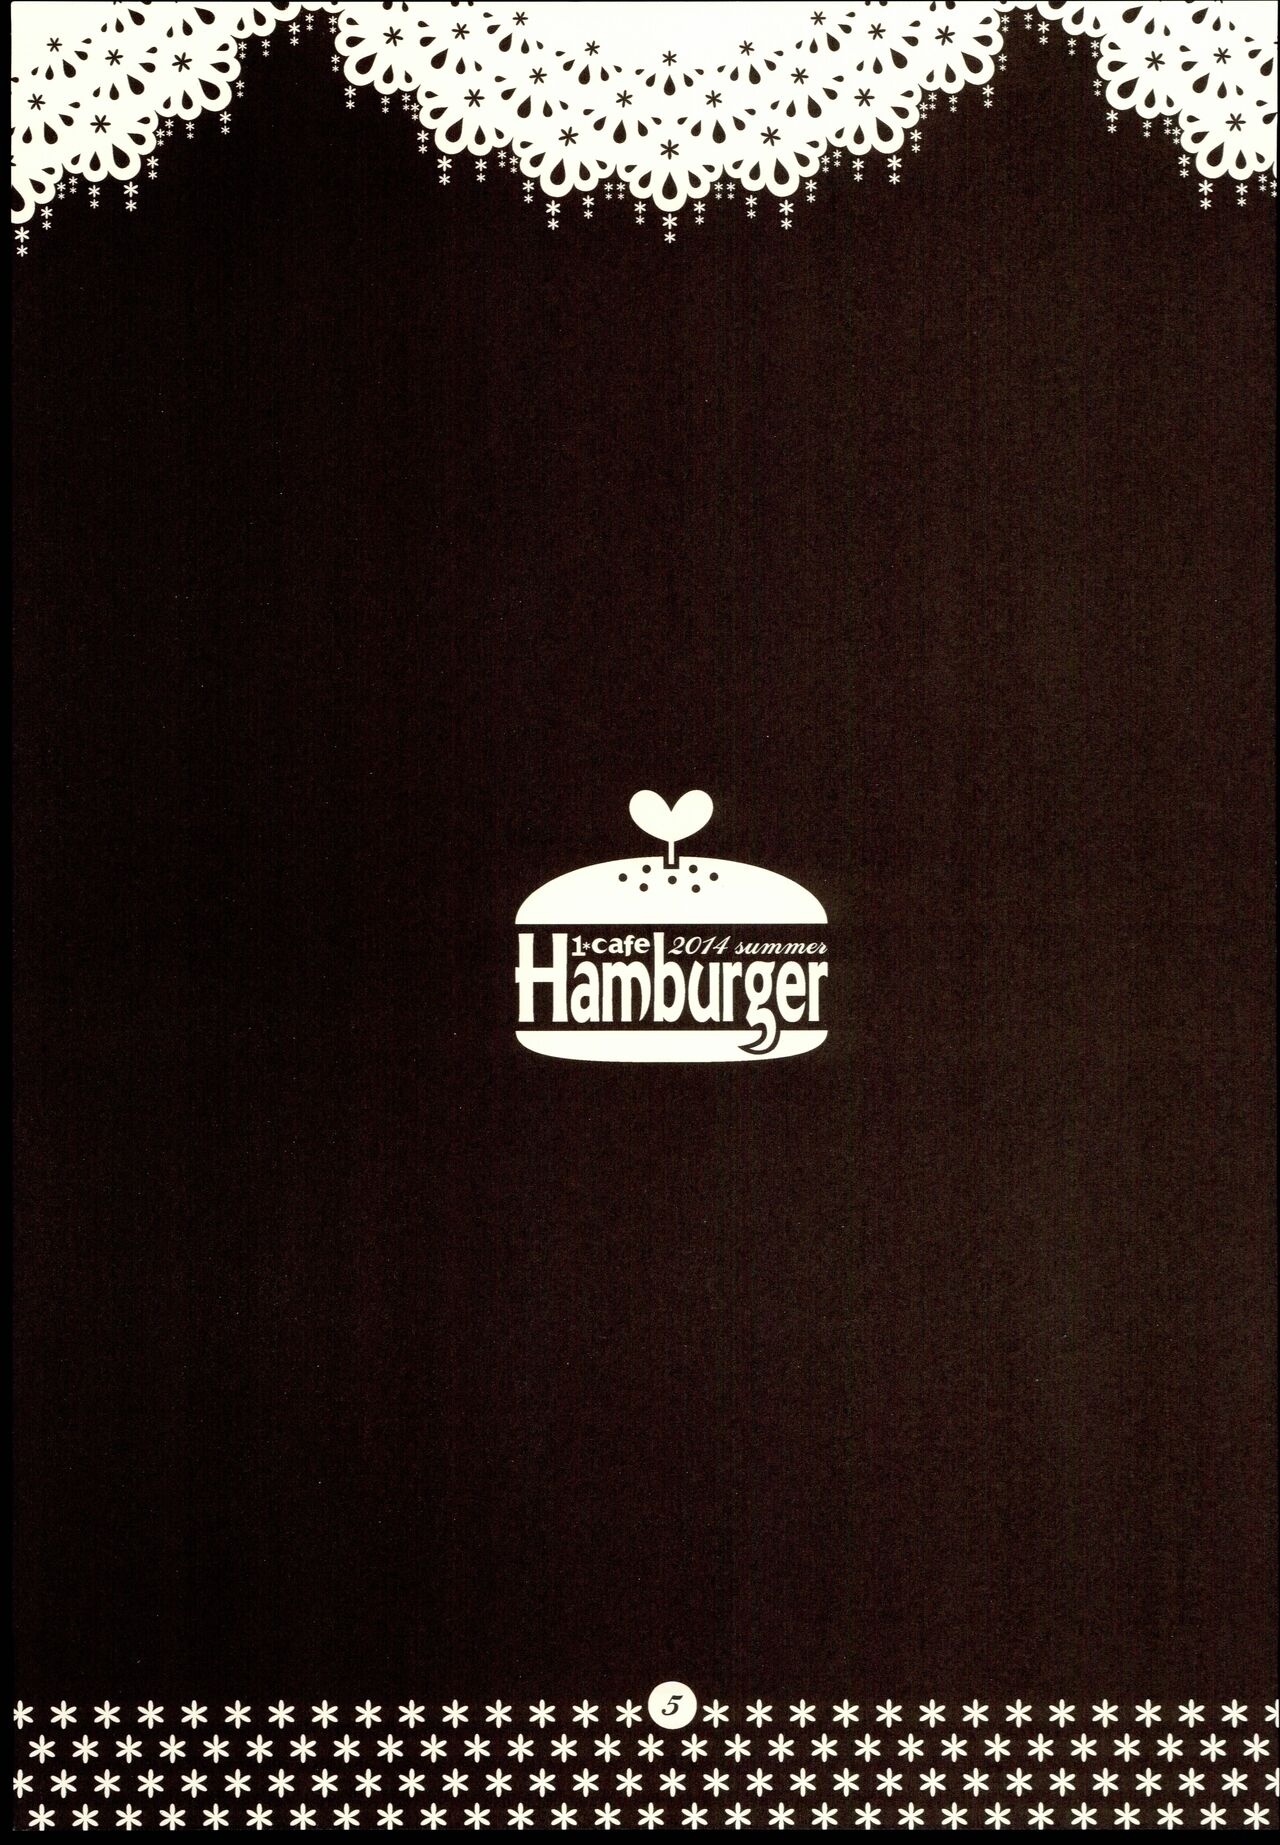 [1-cafe] Hamburger 6